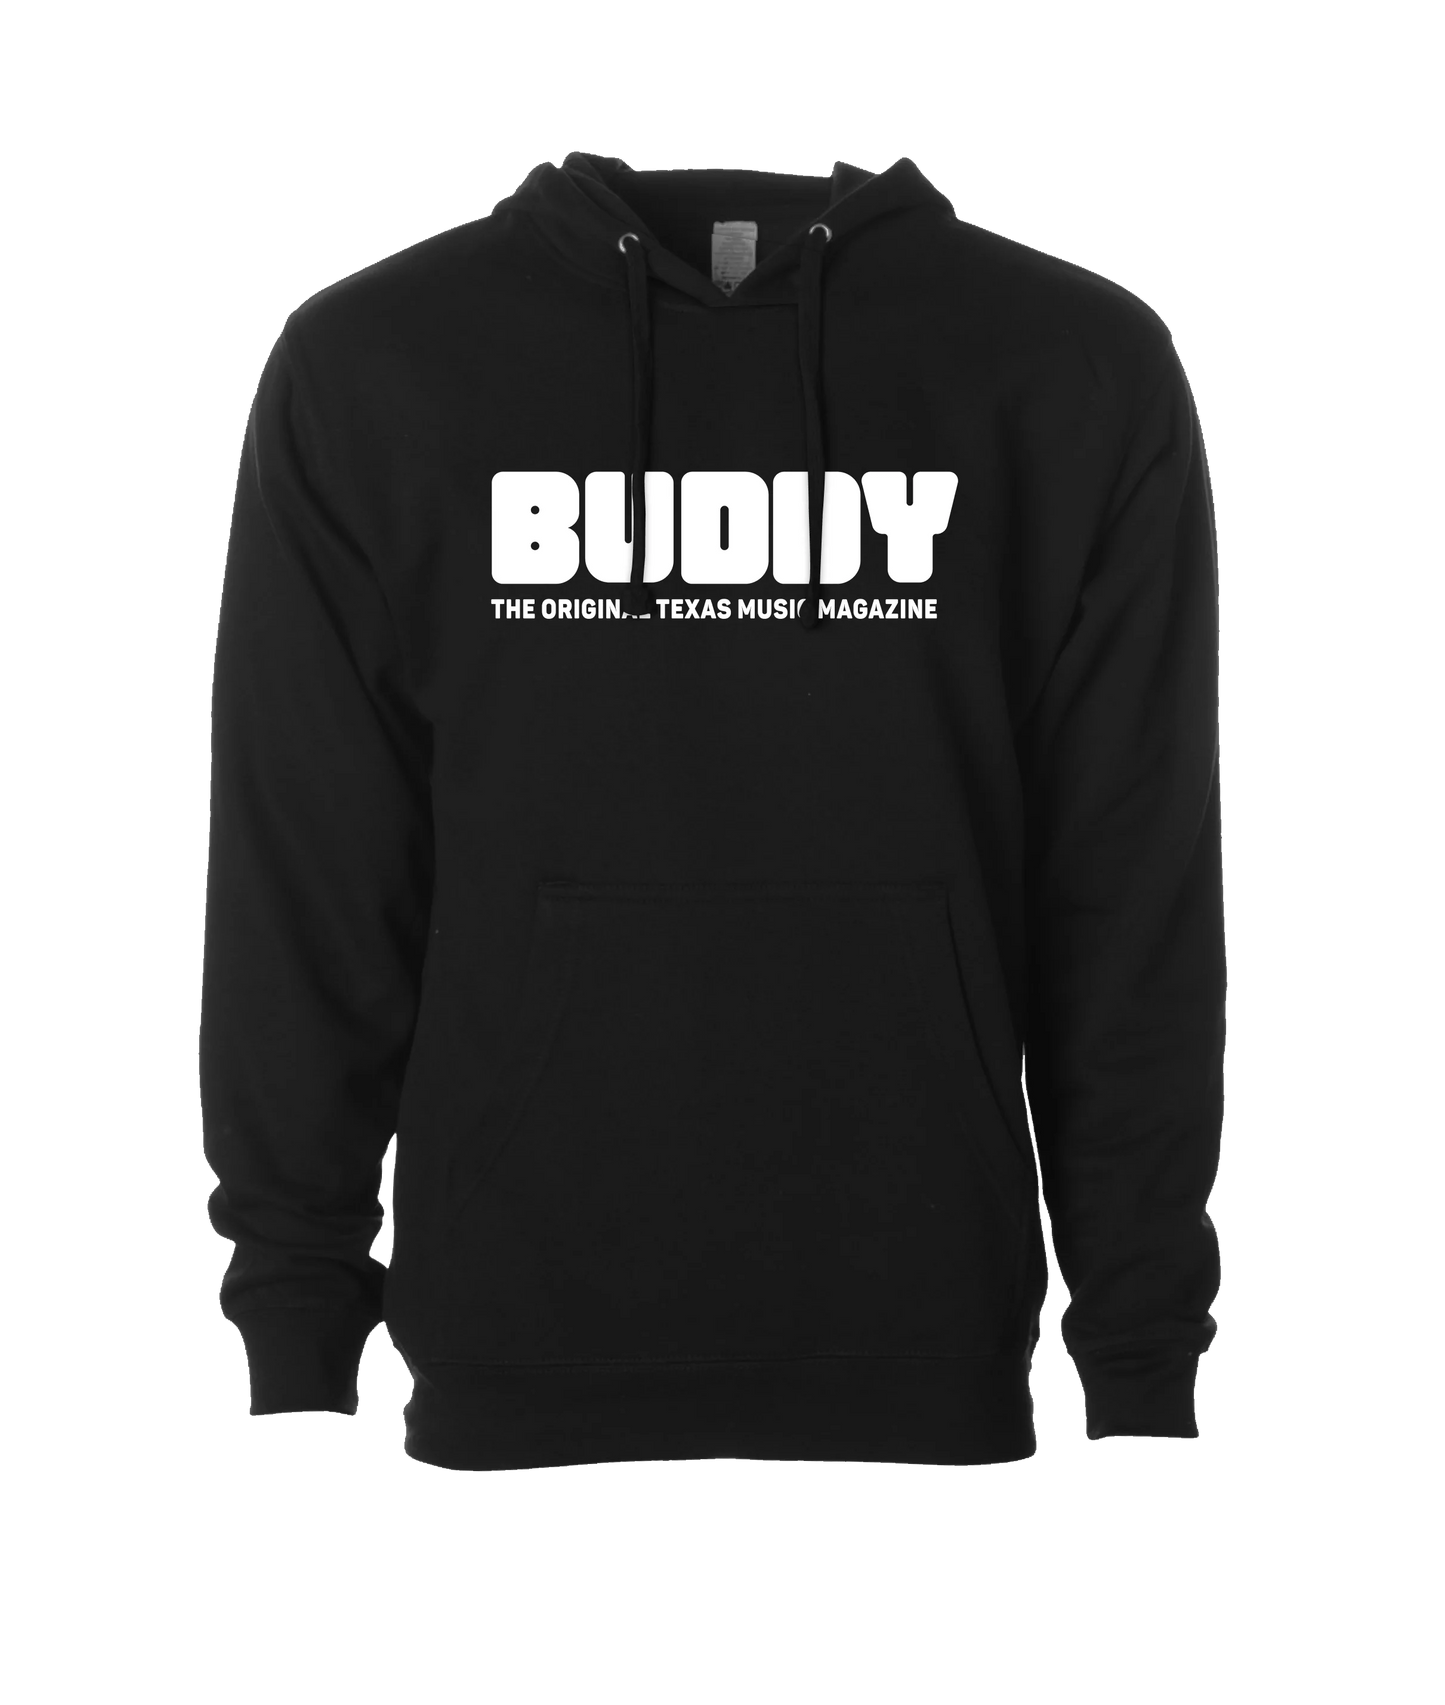 Buddy Magazine - 73 Logo Flat - Black Hoodie